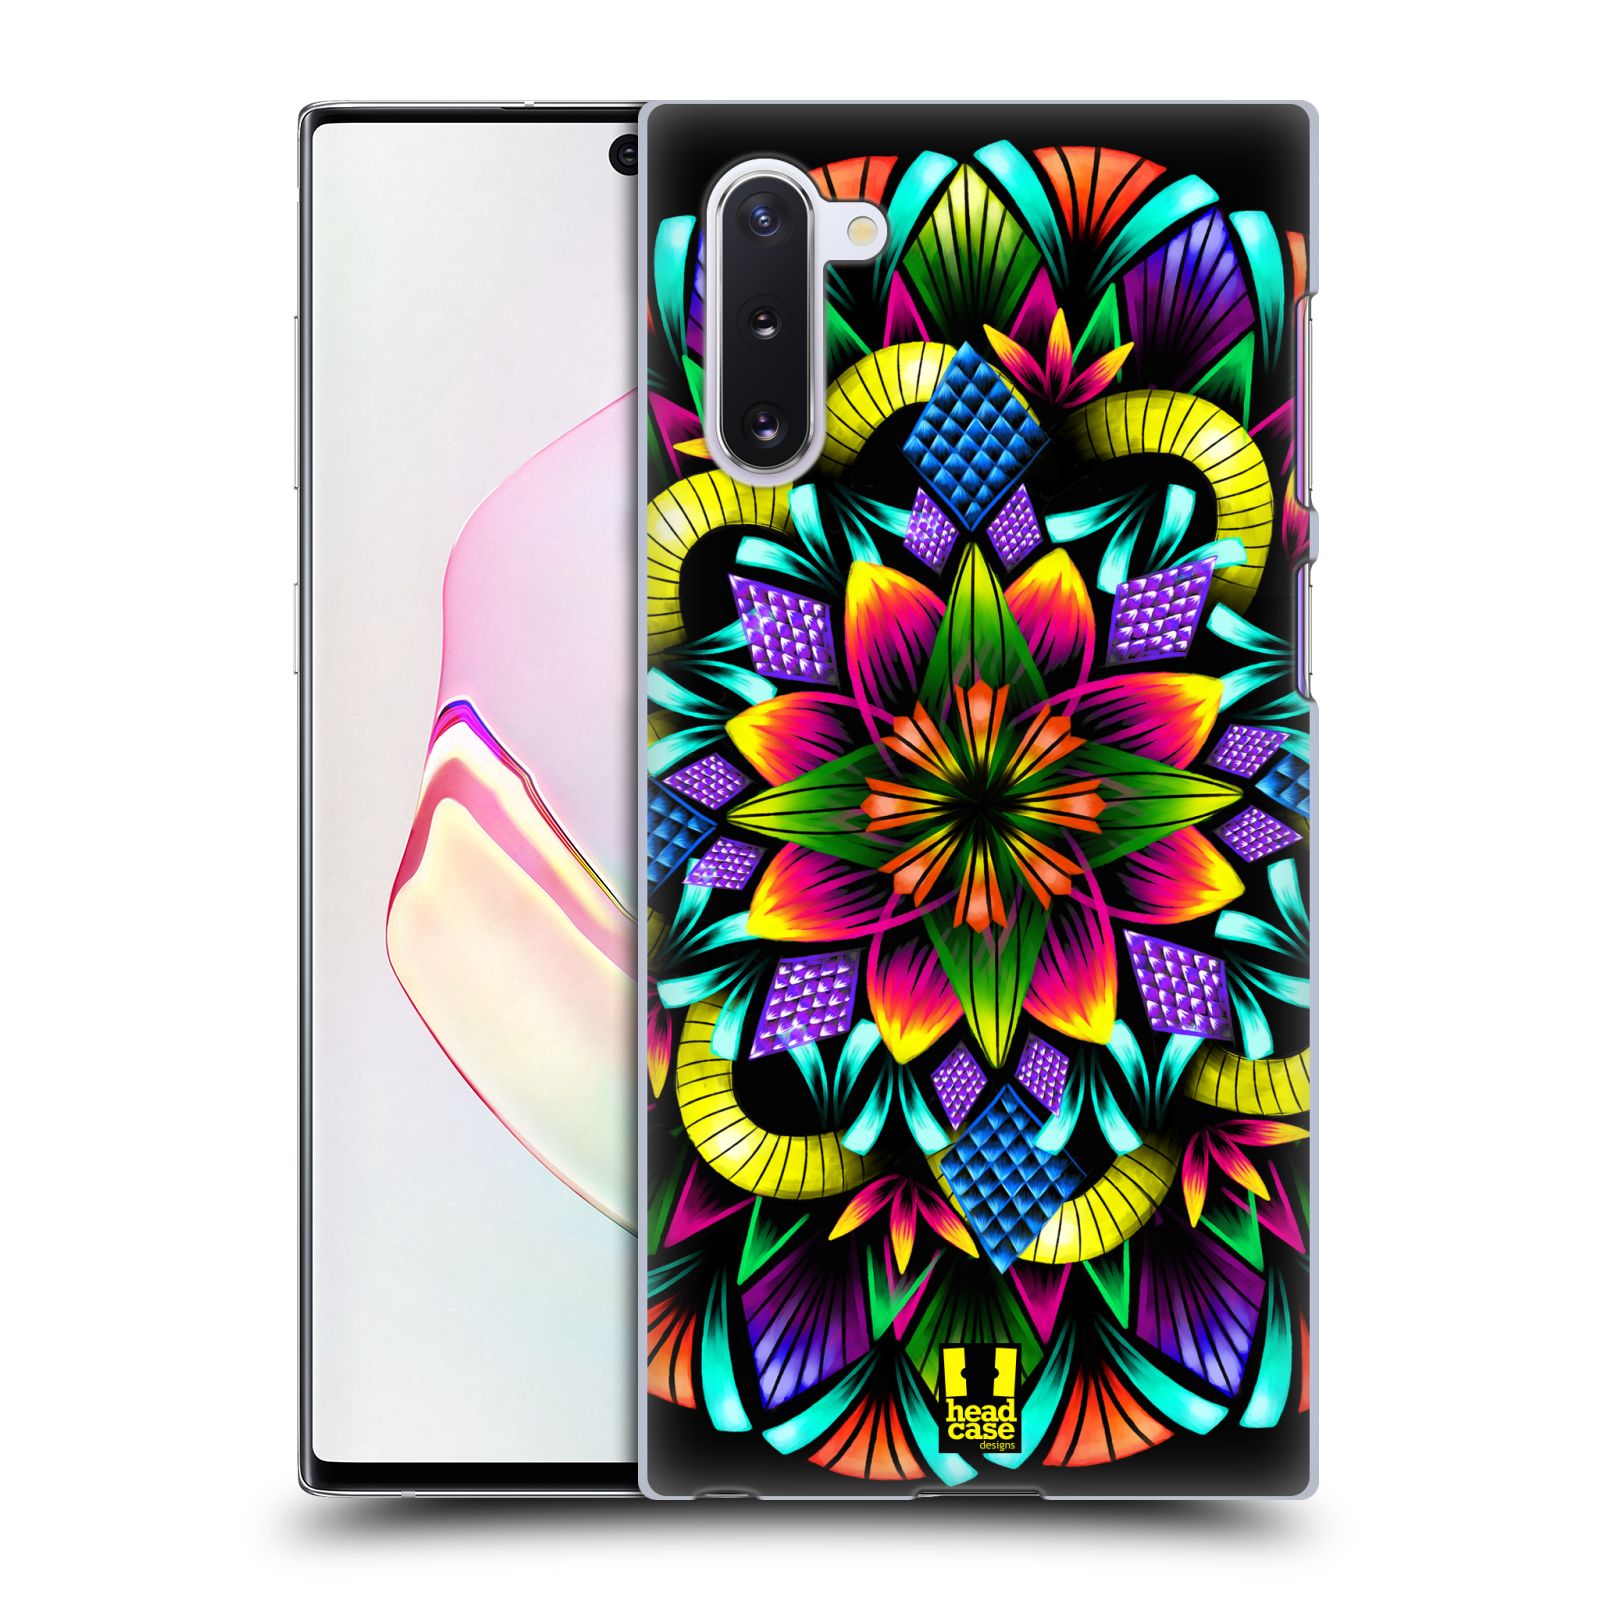 Pouzdro na mobil Samsung Galaxy Note 10 - HEAD CASE - vzor Indie Mandala kaleidoskop barevný vzor KVĚTINA